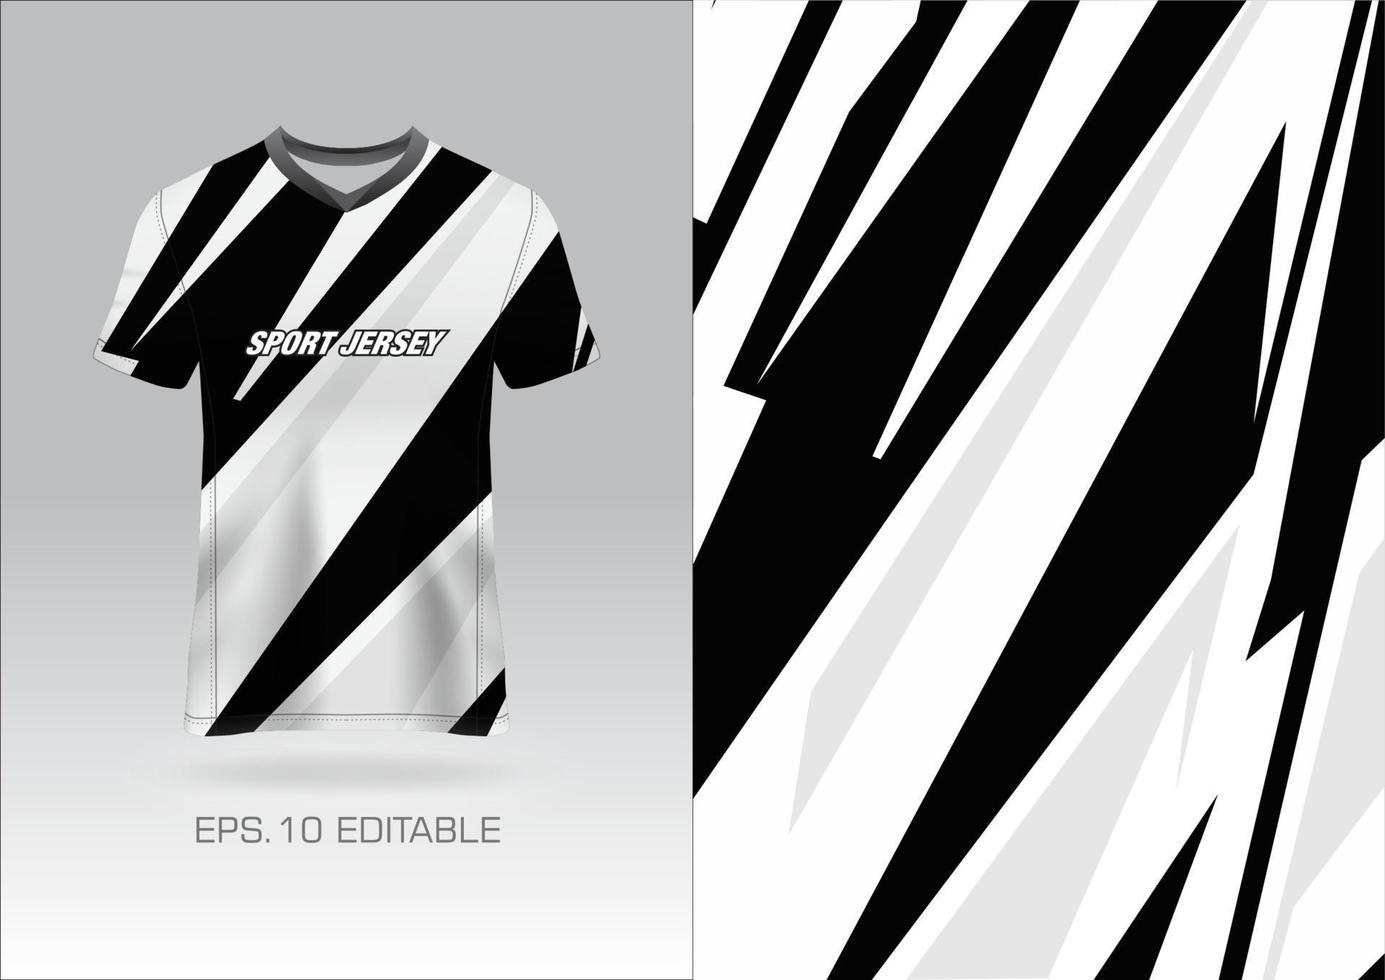 kleding stof textiel ontwerp voor sport t-shirt, voetbal Jersey mockup voor Amerikaans voetbal club. uniform voorkant visie. vector